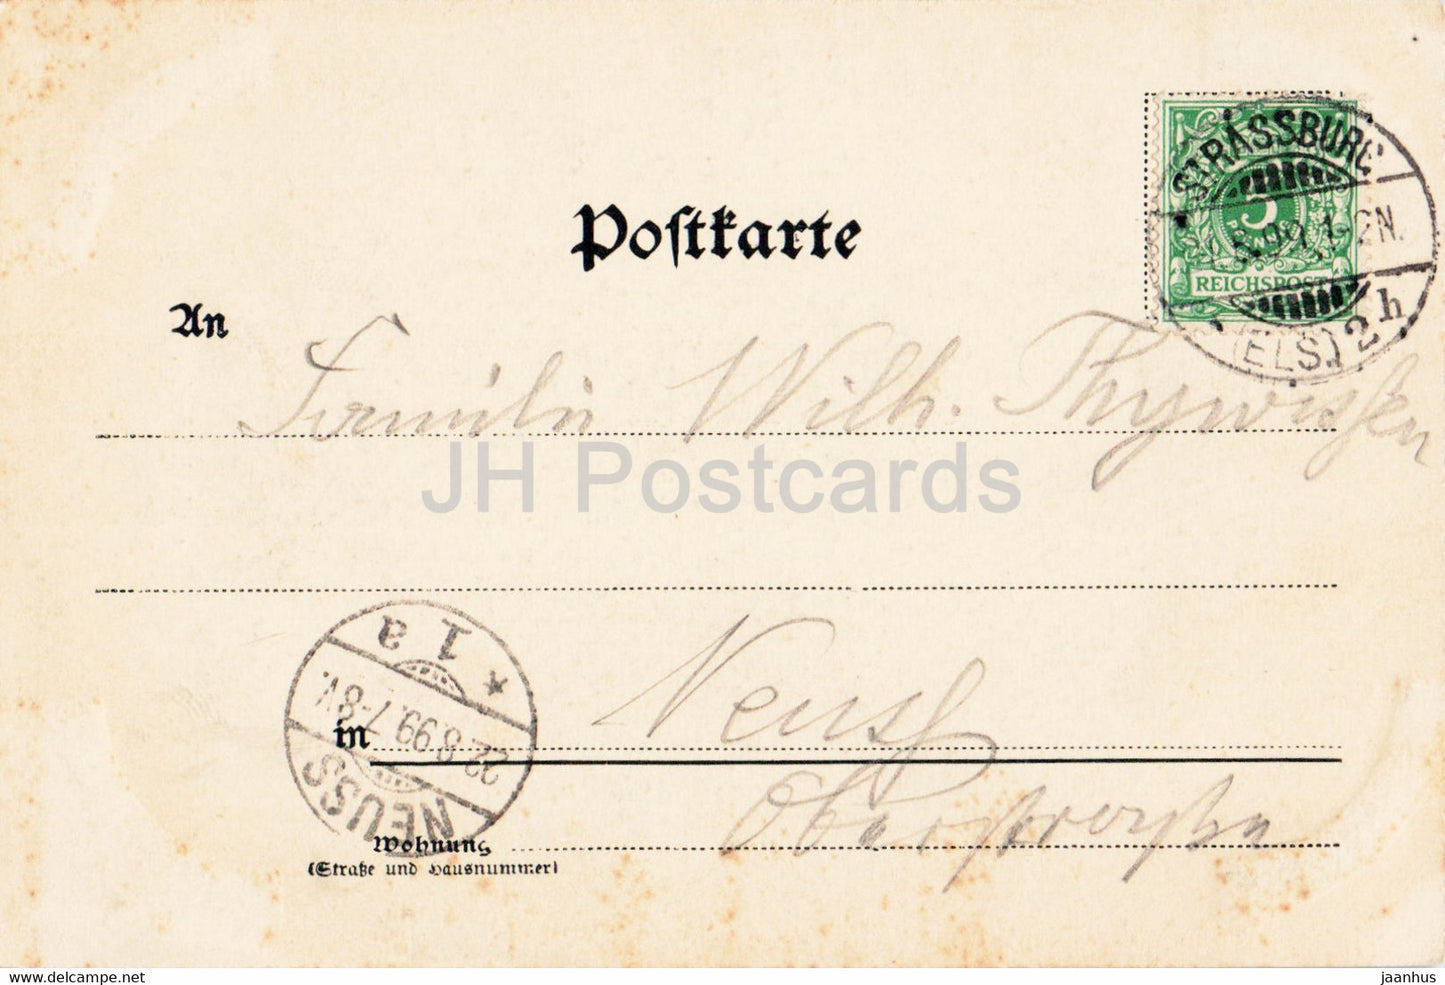 Strasbourg i E - Strasbourg - Das Munster - La Cathedrale - cathédrale - 981 - carte postale ancienne - 1899 - France - utilisé